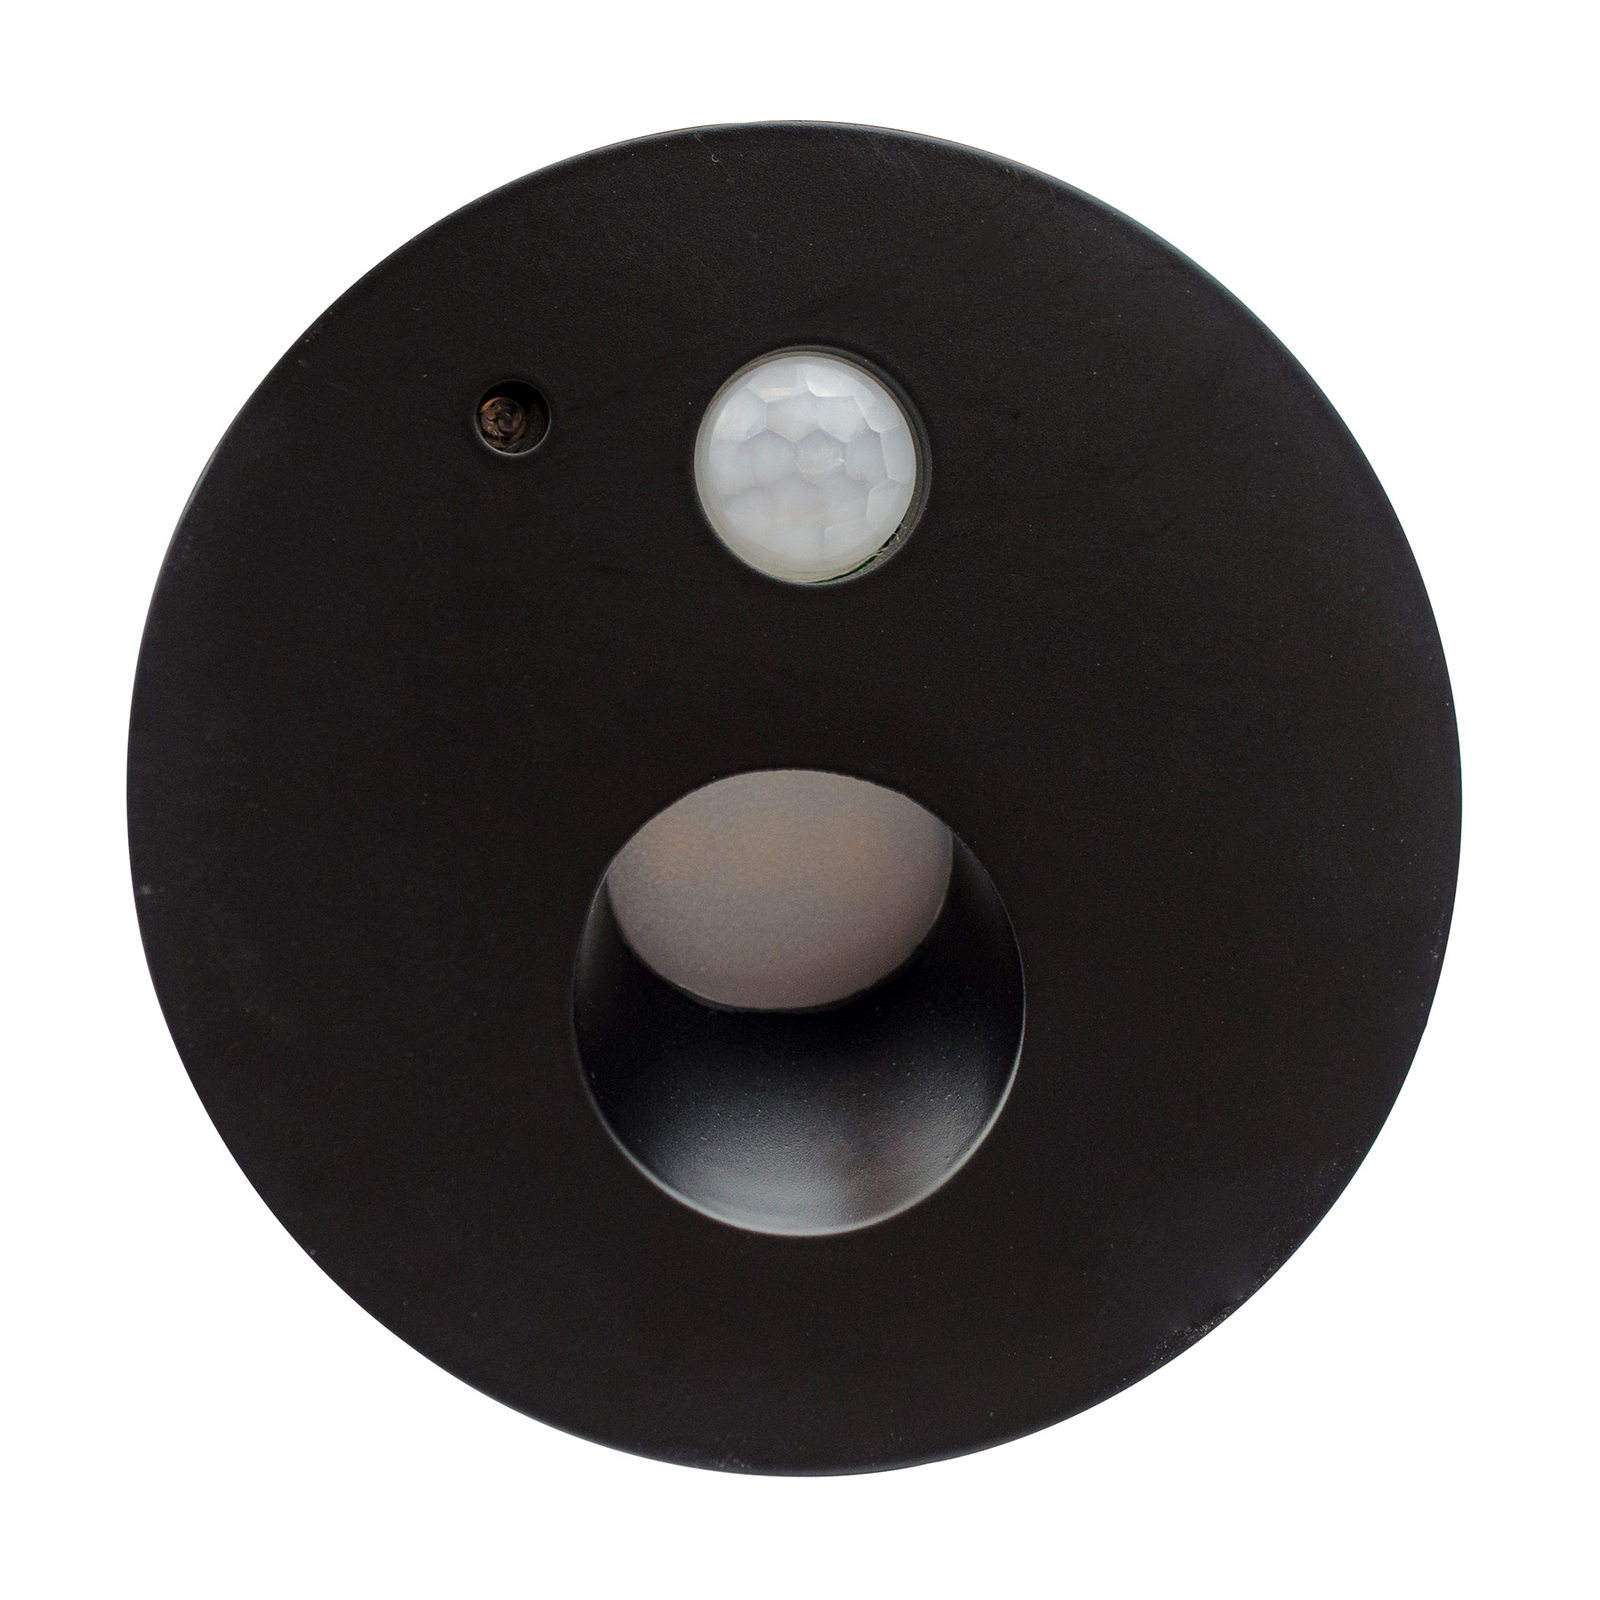 Arcchio Neru LED downlight, sensor, round, black